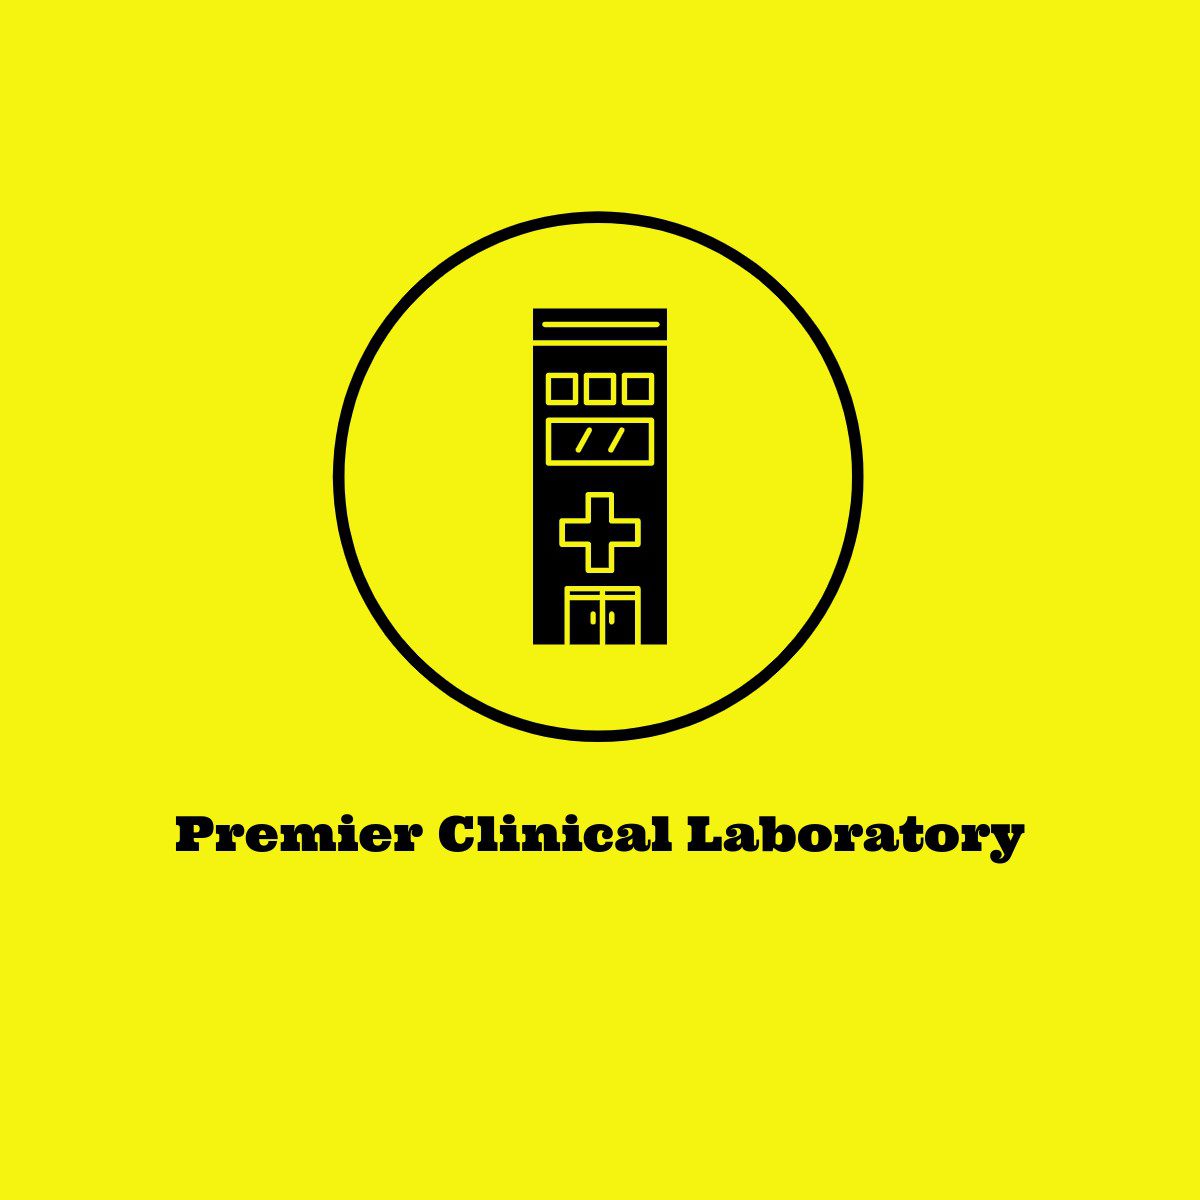 Premier Clinical Laboratory